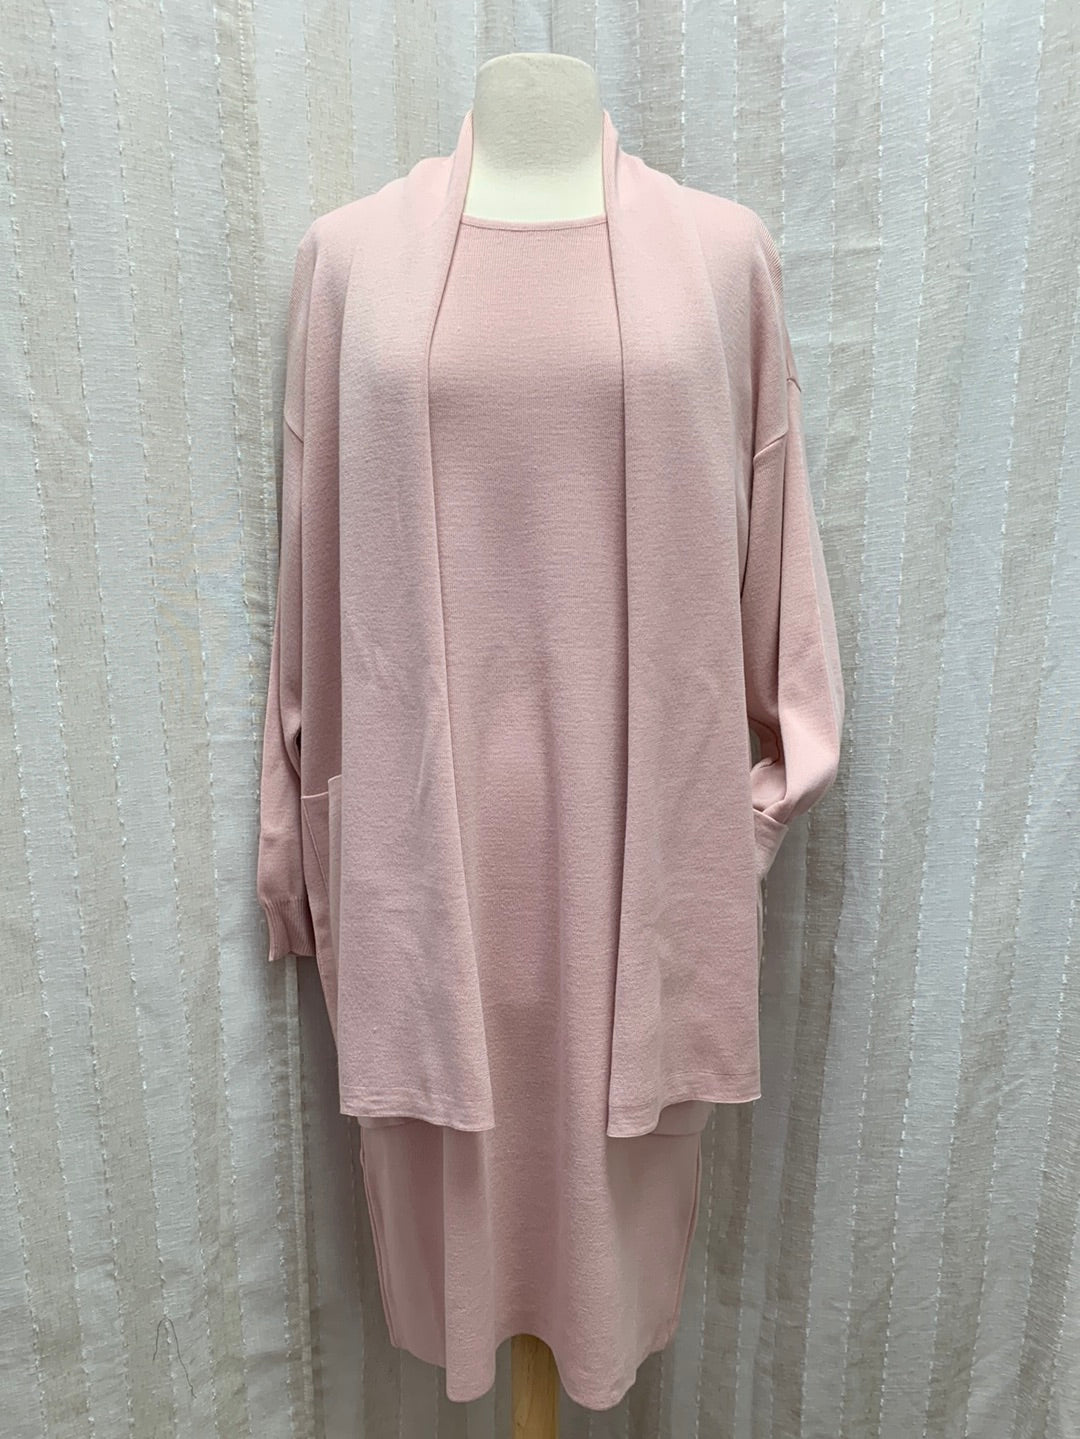 NWOT - GISPA pink Wool Blend Short Sleeve Shift Shirt Dress